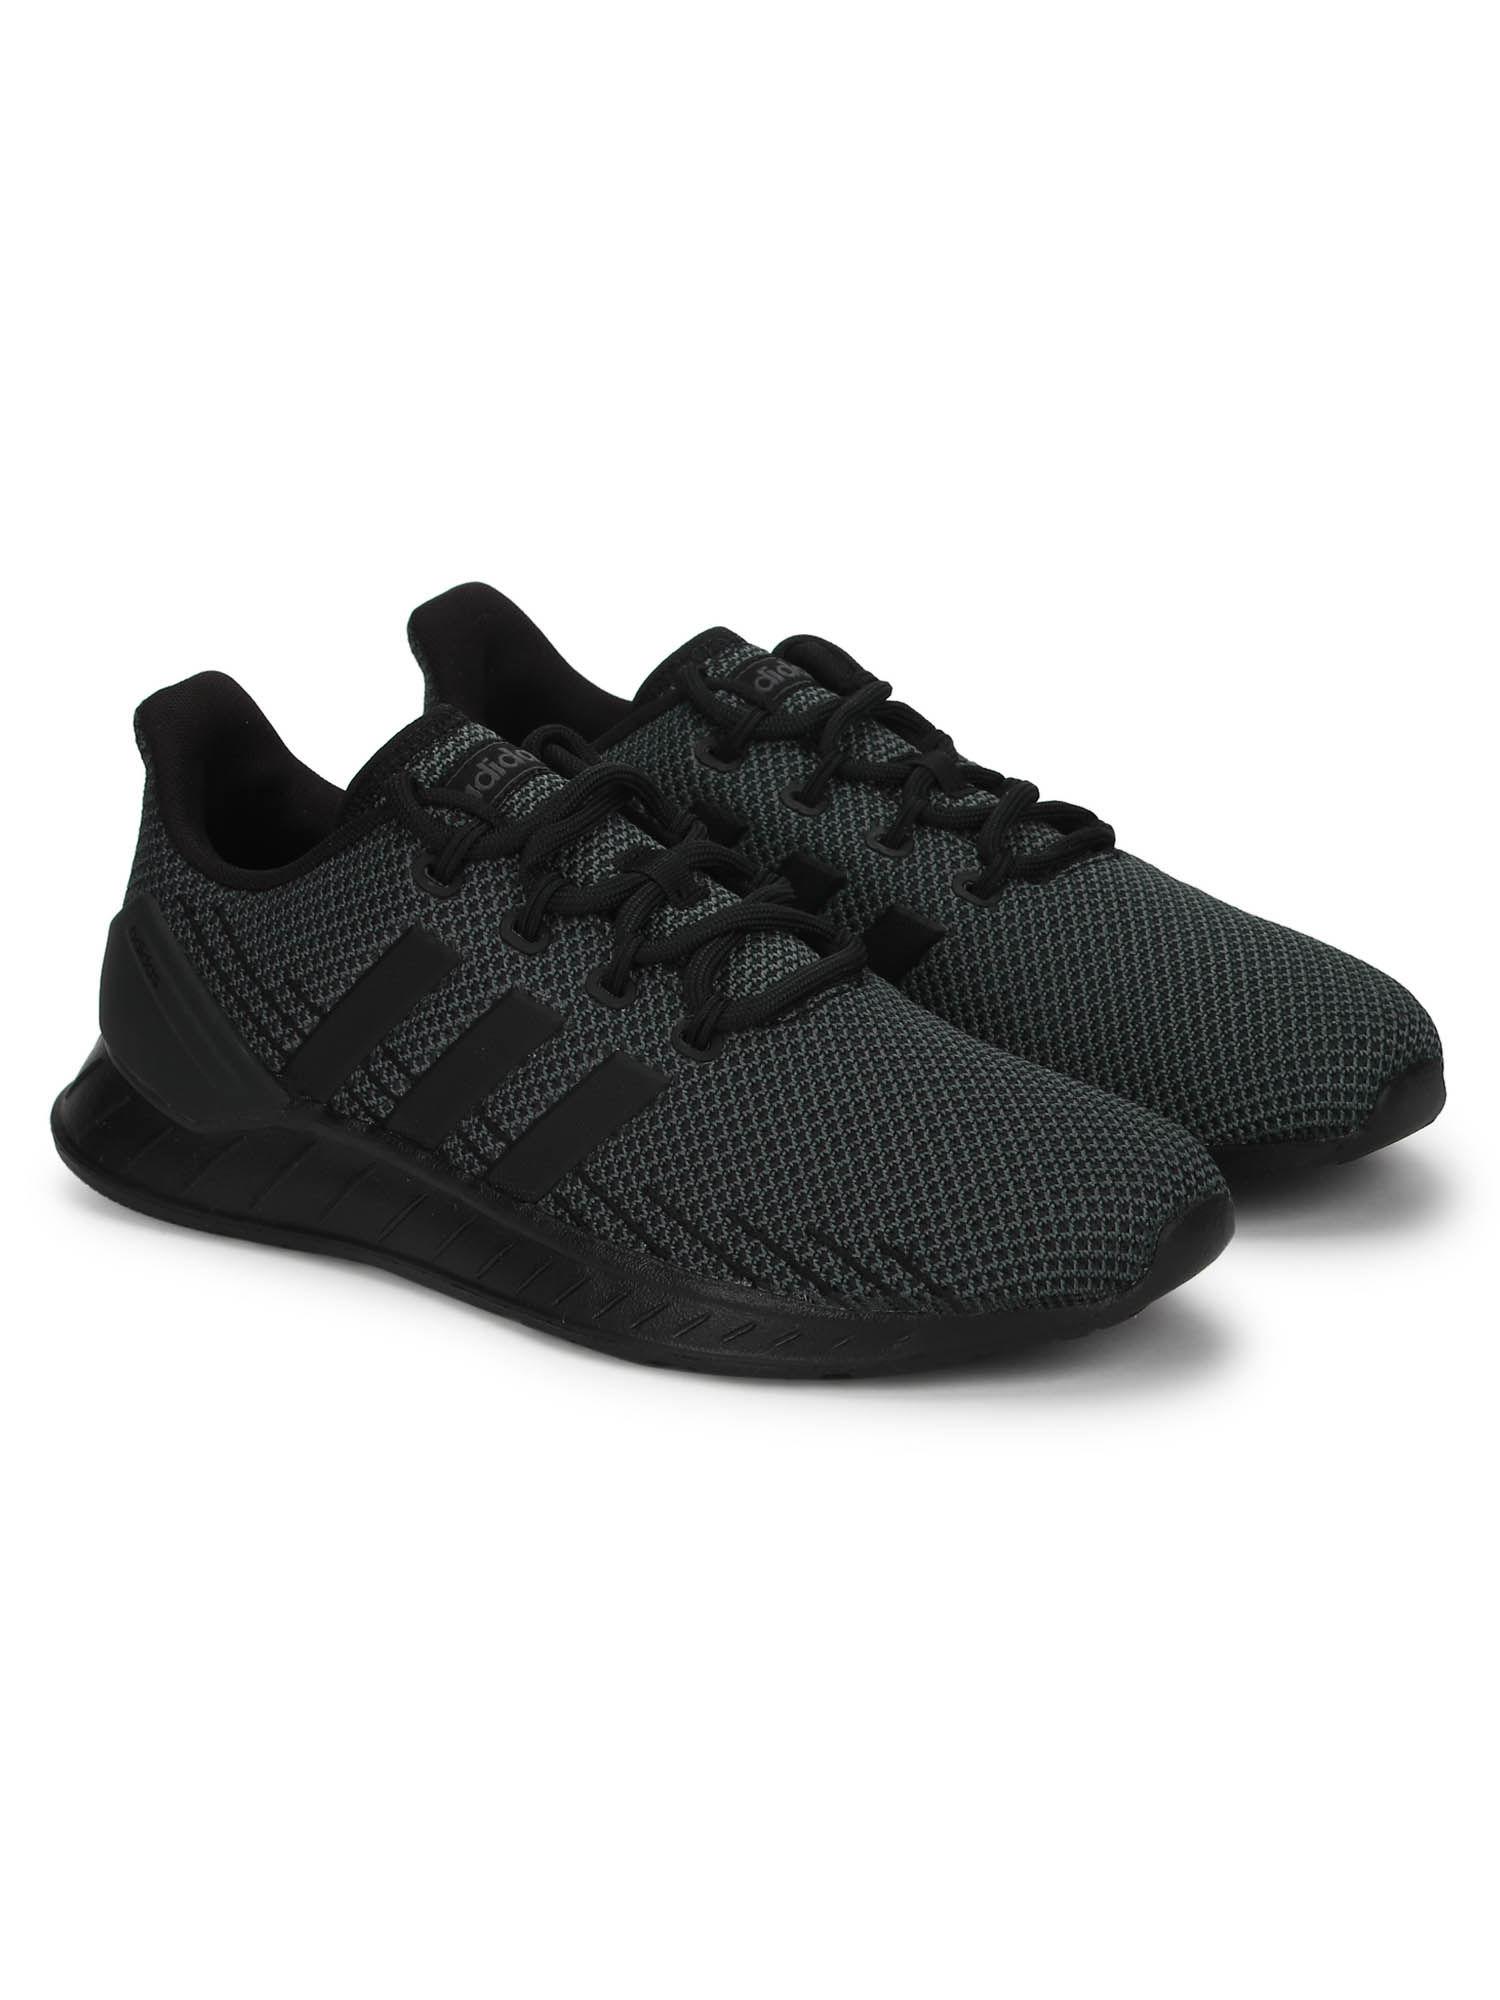 questar-flow-nxt-black-running-shoes